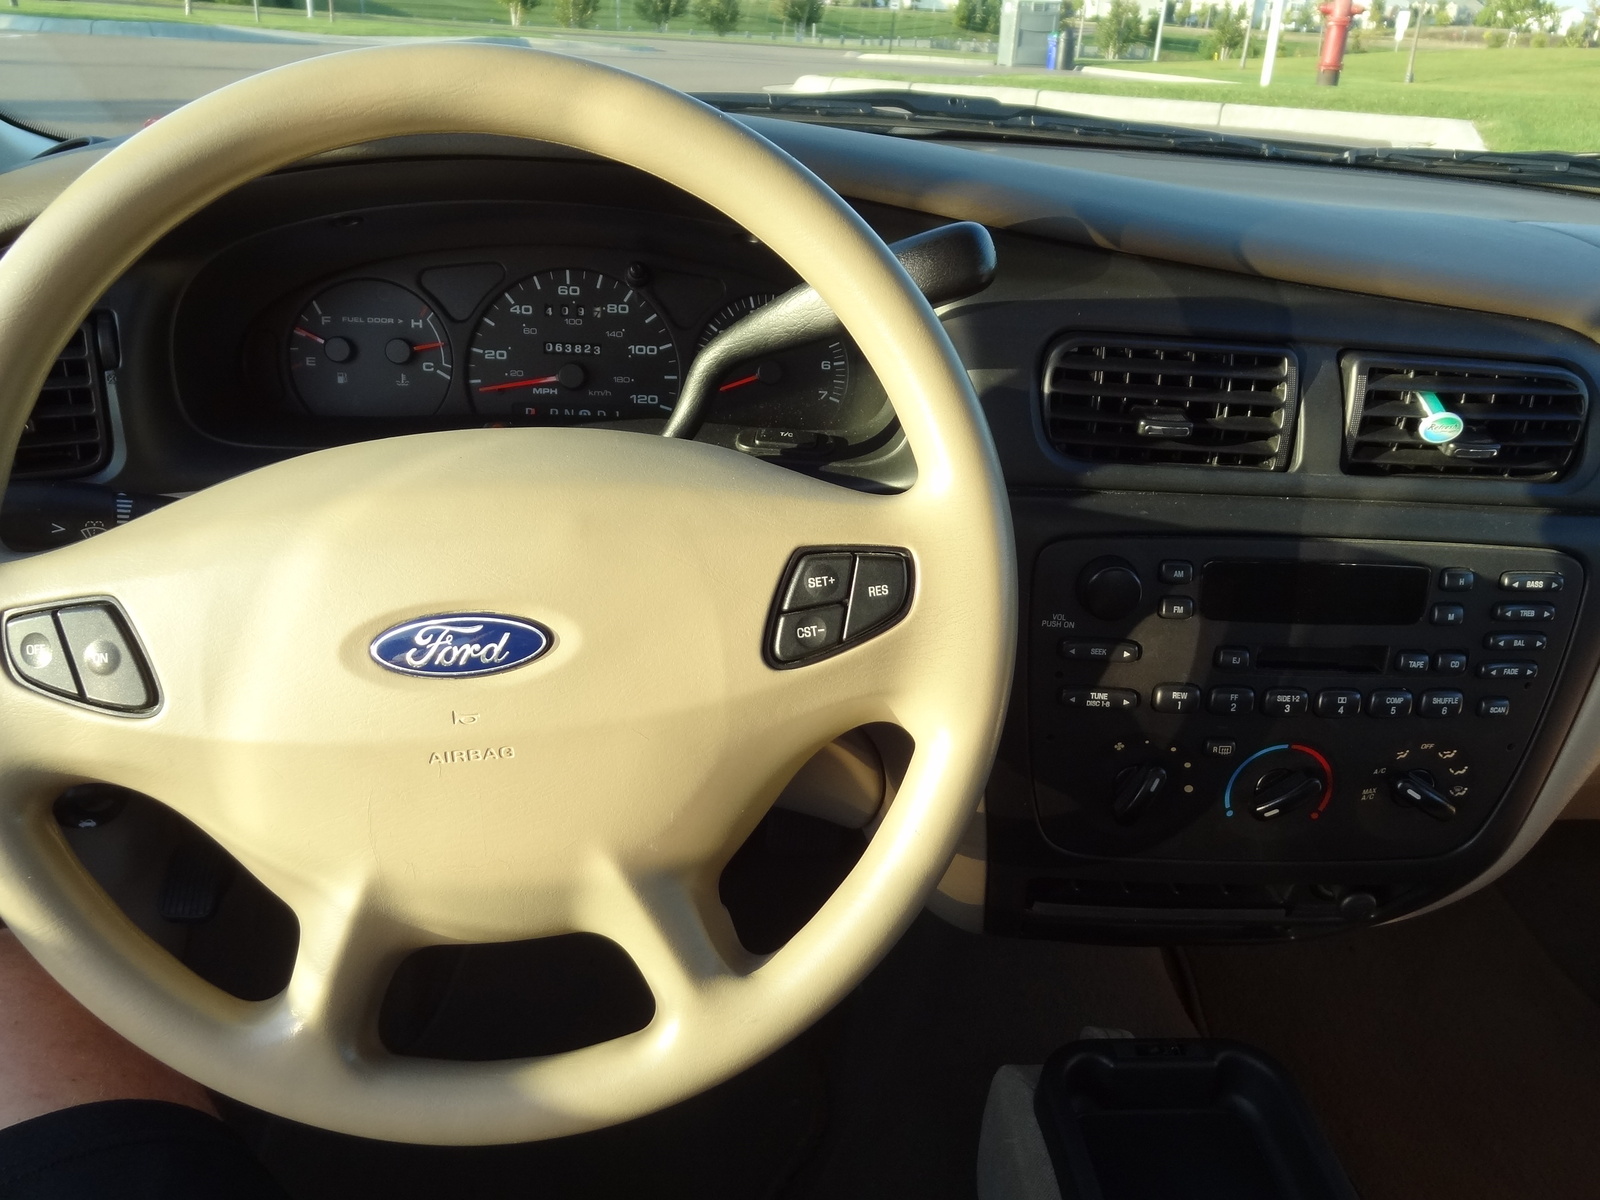 2000 Ford taurus wagon interior #3